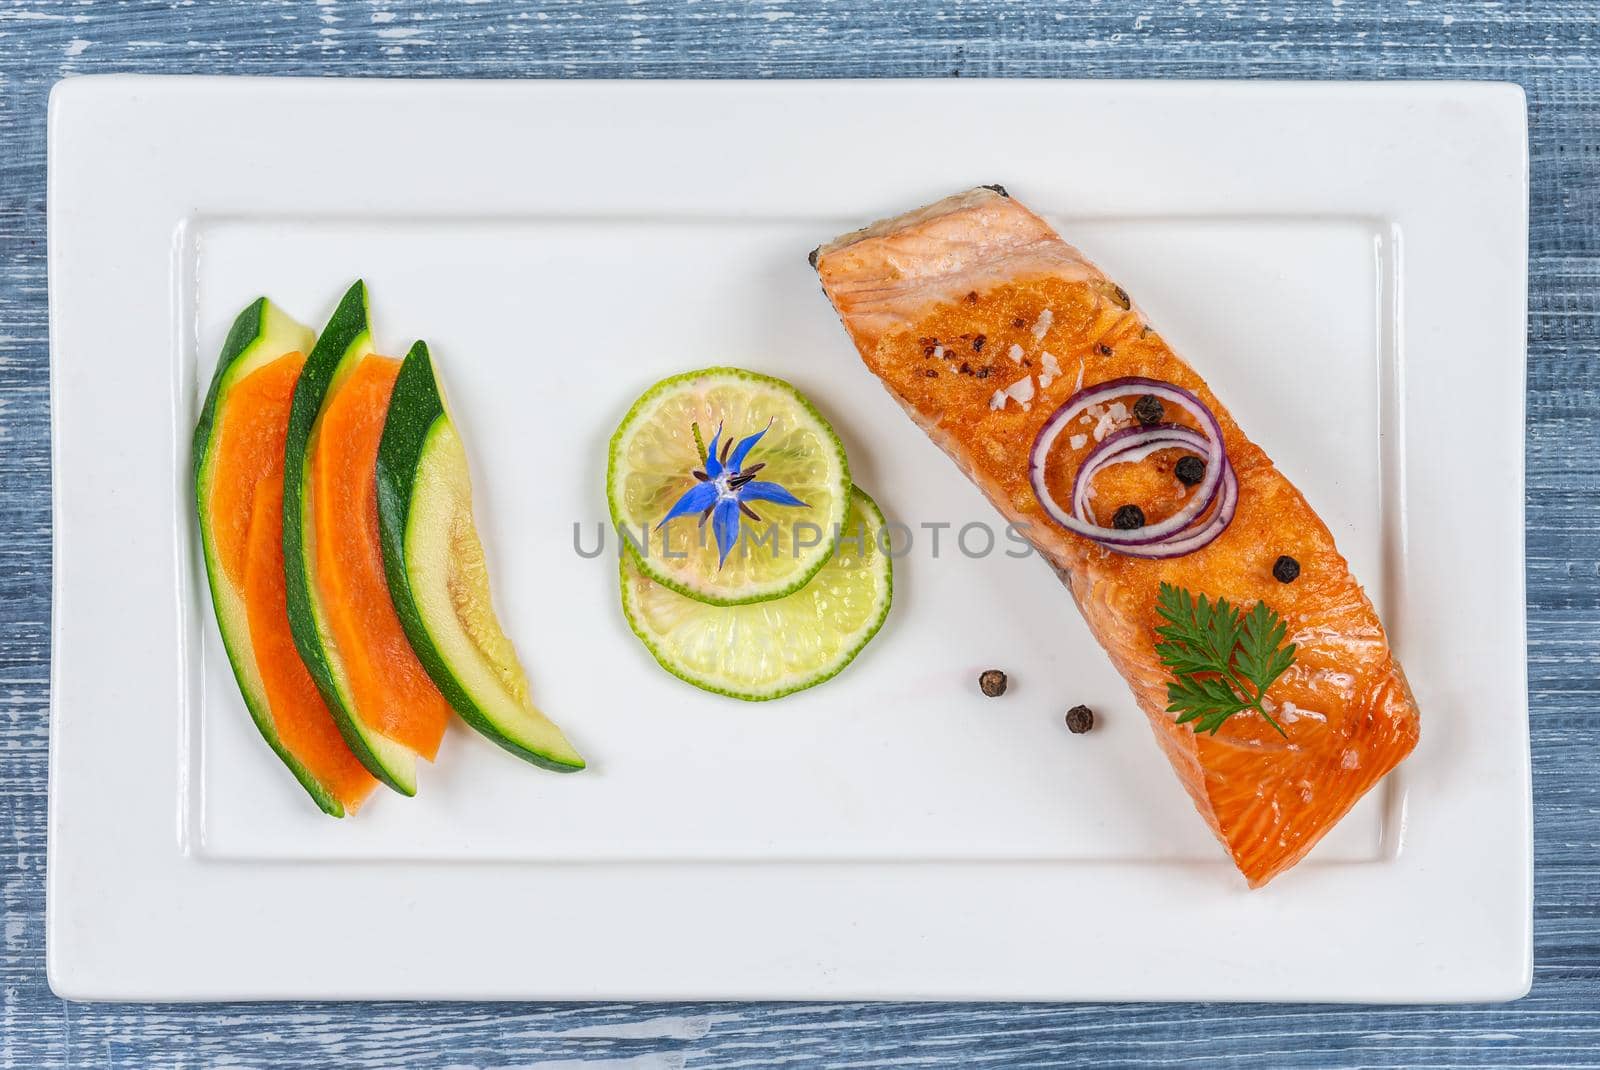 Salmon, slats carote and zucchini minimalist image by JPC-PROD